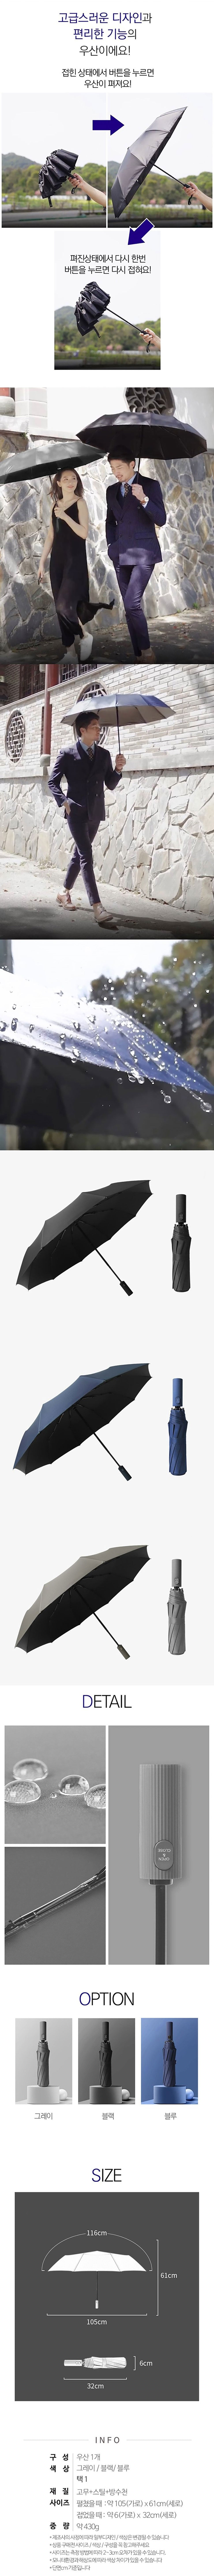 3 step one touch auto umbrella rain raining summer